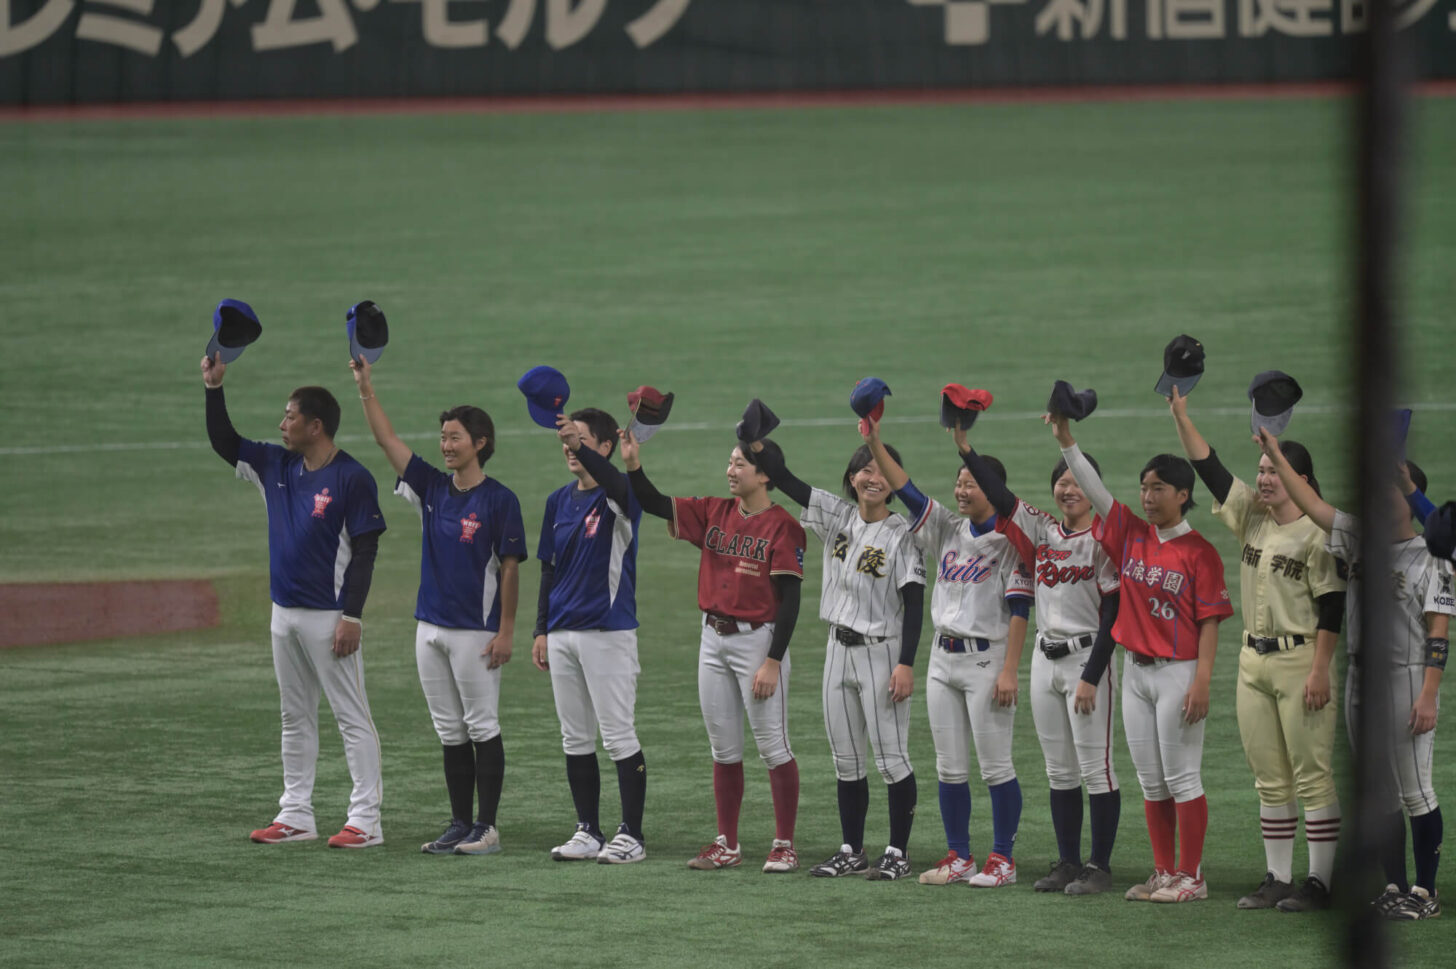 高校野球女子選抜 vs イチロー選抜 KOBE CHIBEN 高校野球女子選抜チーム